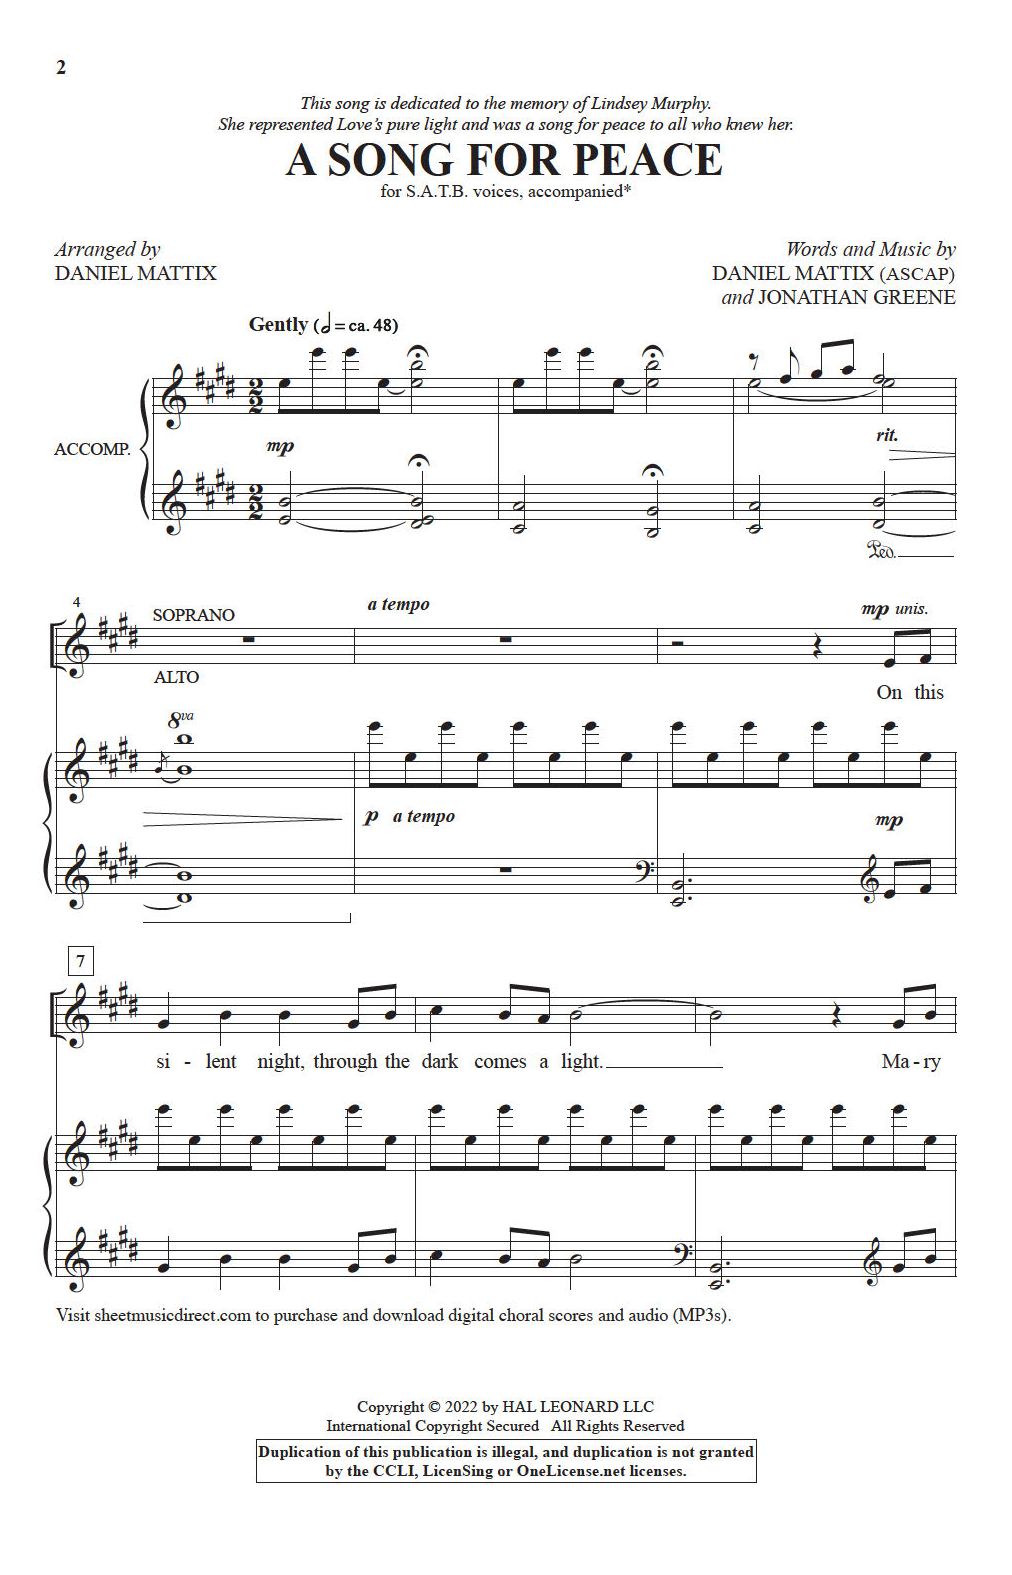 Daniel Mattix and Jonathan Greene A Song For Peace (arr. Daniel Mattix) Sheet Music Notes & Chords for SATB Choir - Download or Print PDF